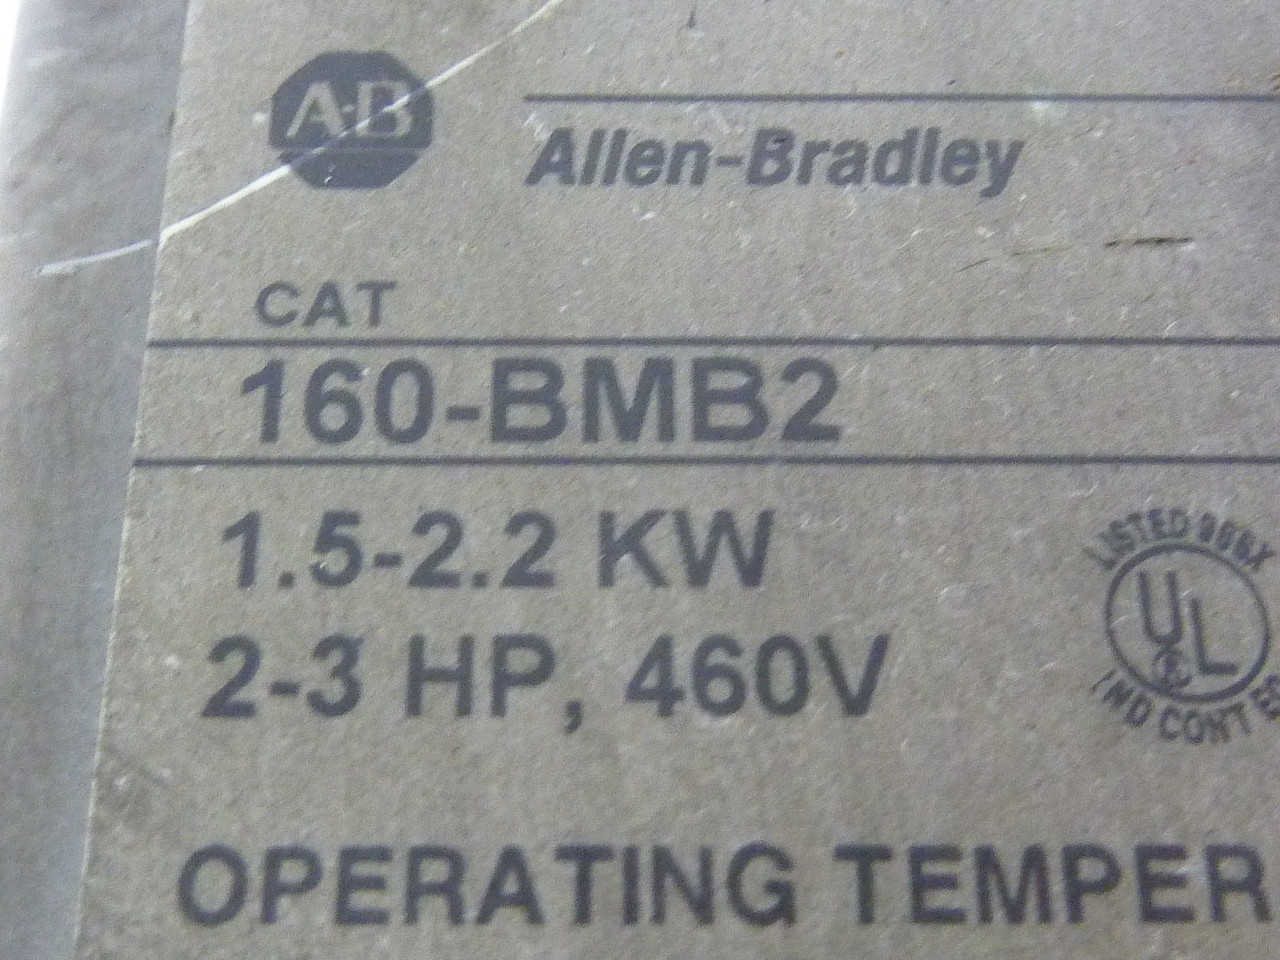 Allen-Bradley 160-BMB2 Ser.A Dynamic Brake Module 460V 2-3HP 1.5-2.2kW USED